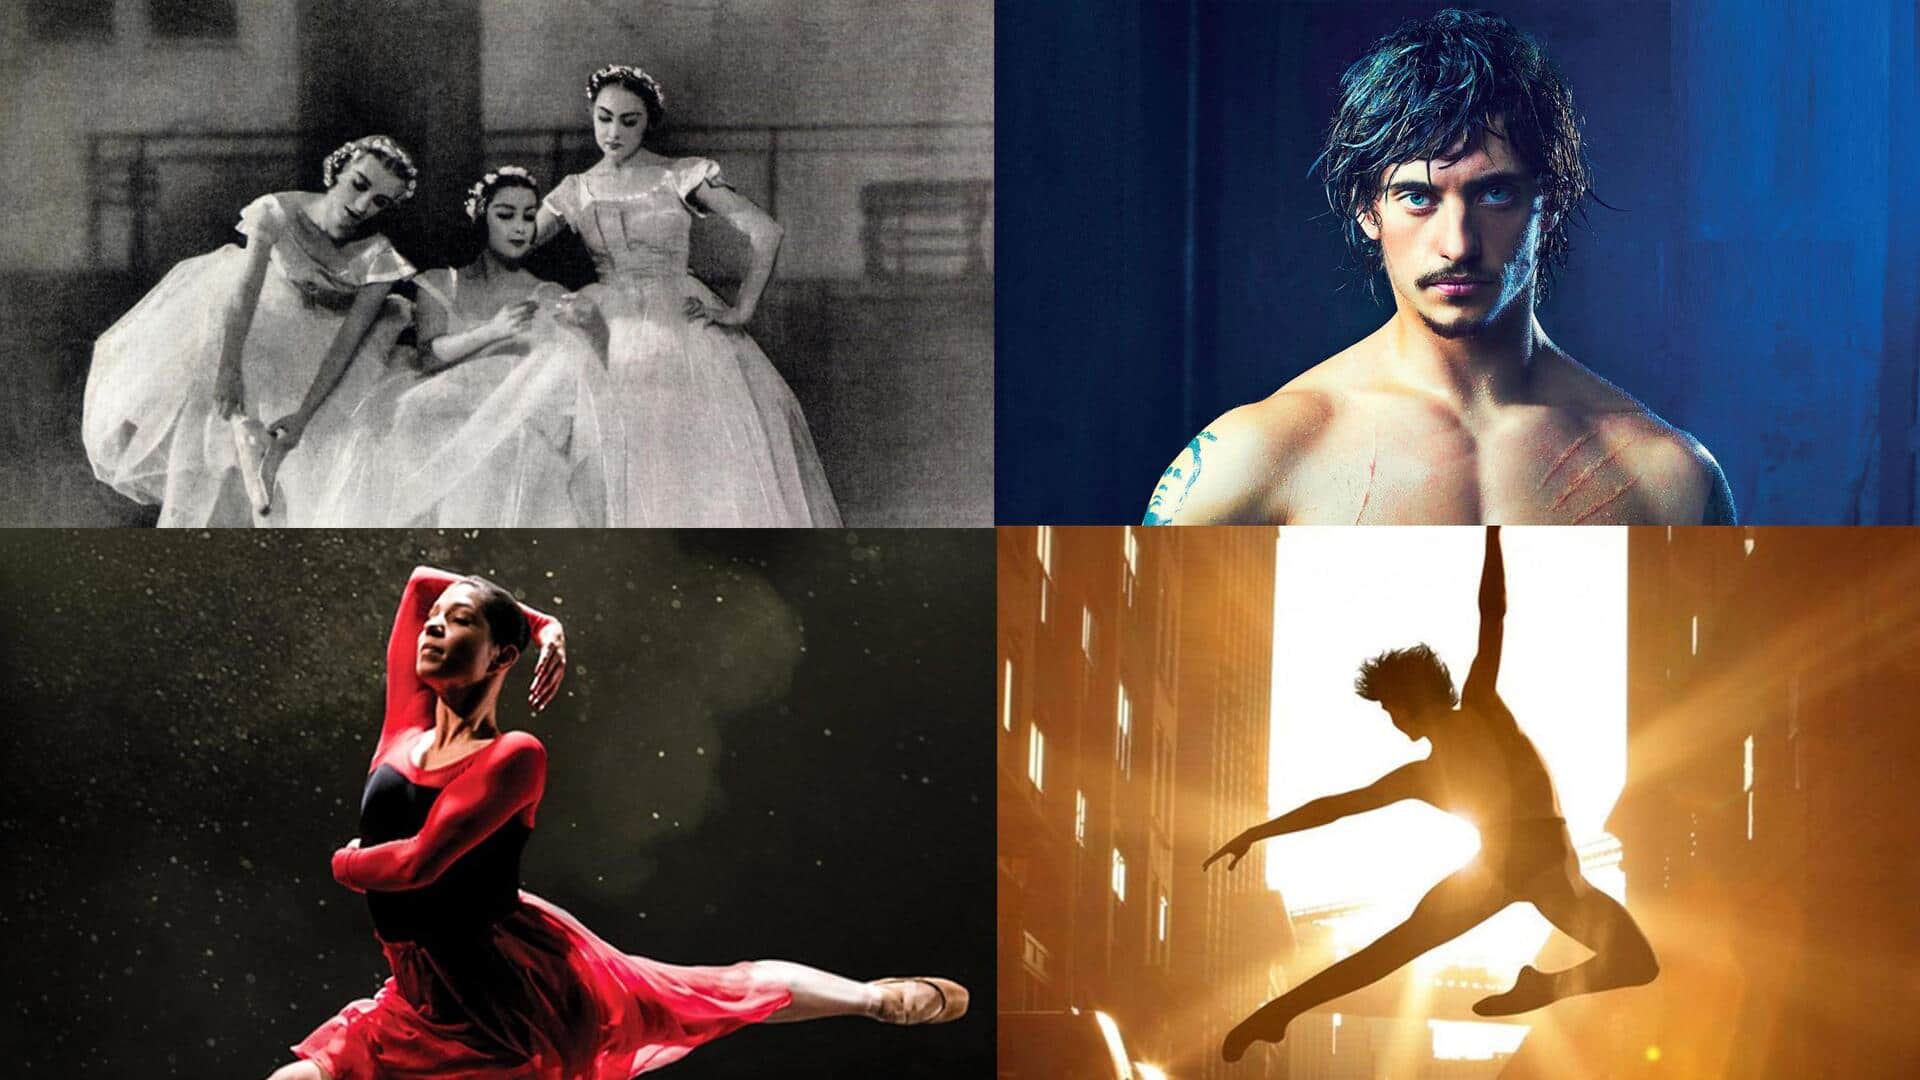 Best documentaries on dance, according to IMDb ratings 